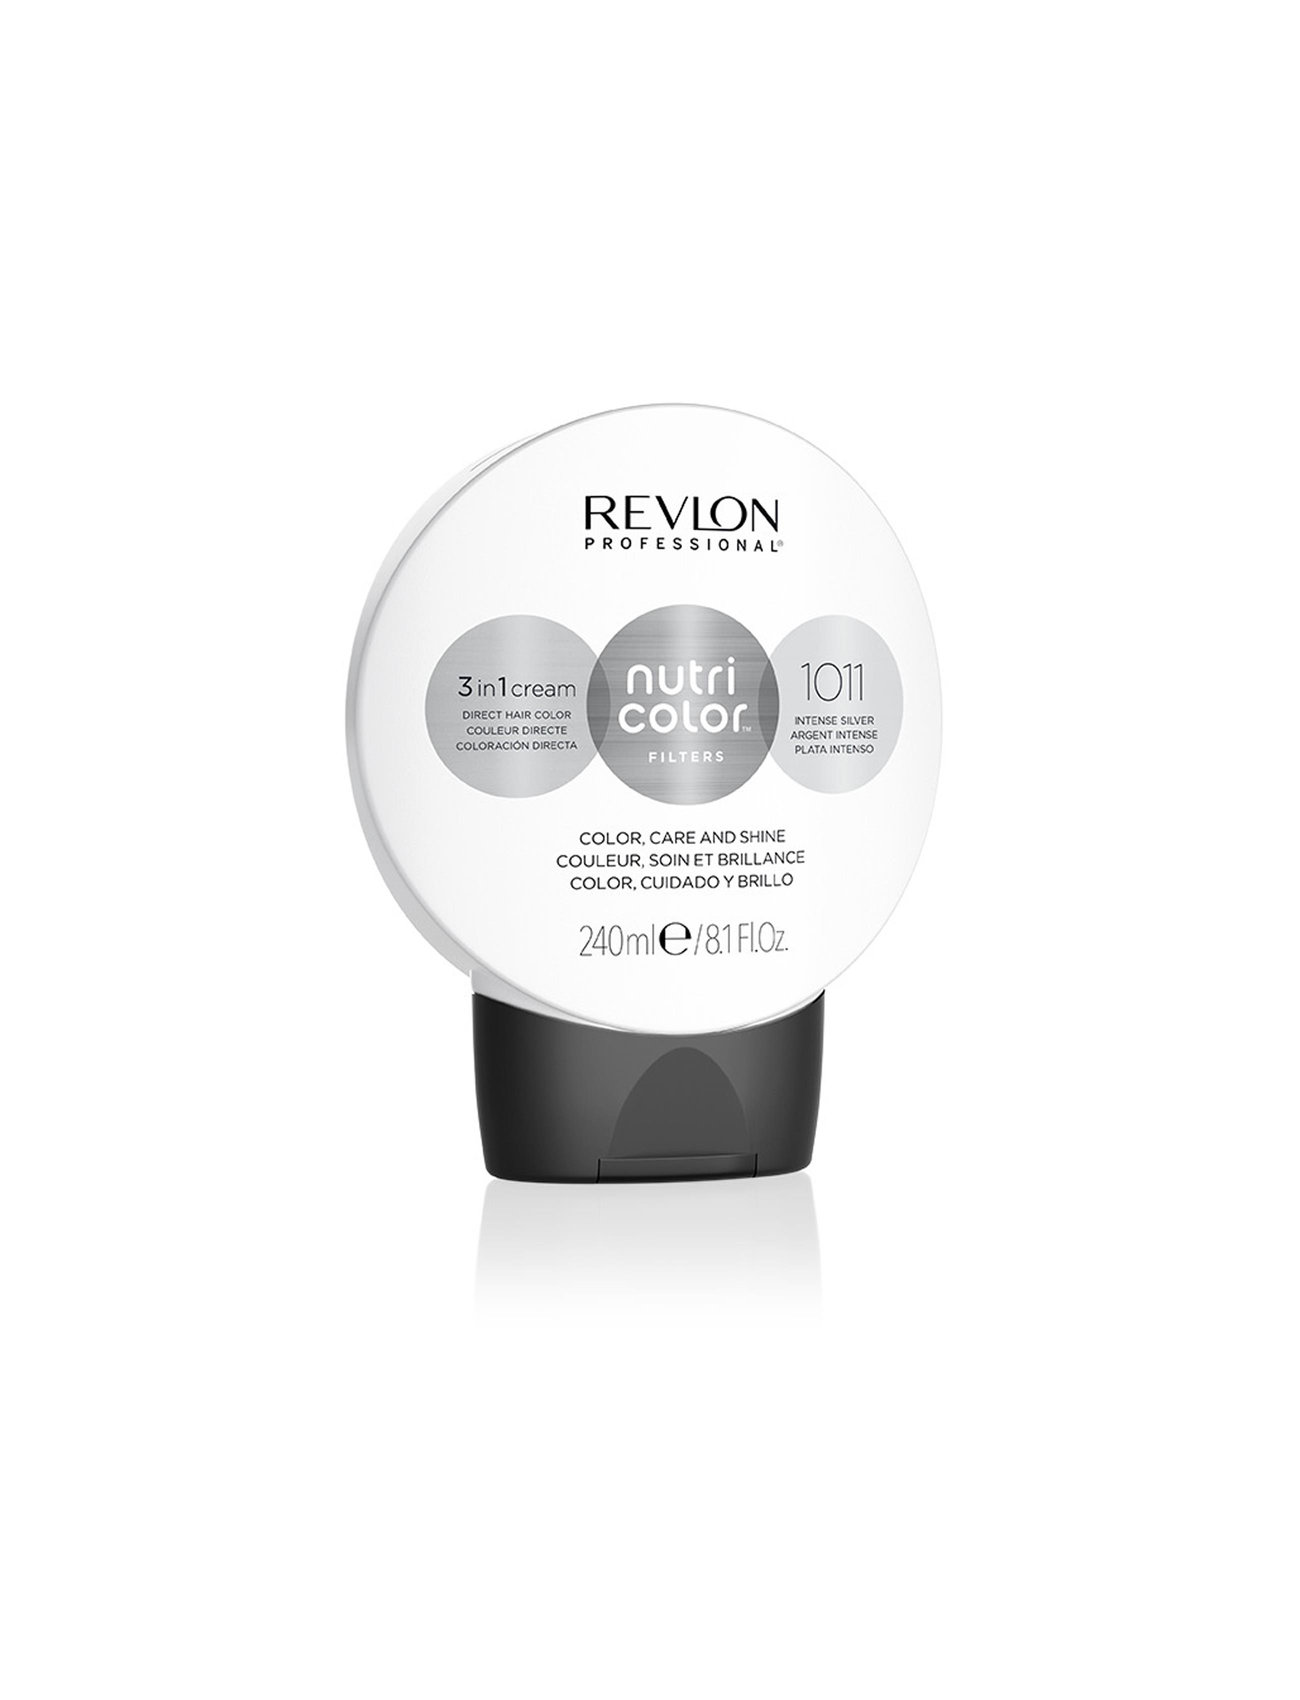 "Revlon Professional" "Nutri Color Filters 240Ml 1011 Beauty Women Hair Care Treatments Nude Revlon